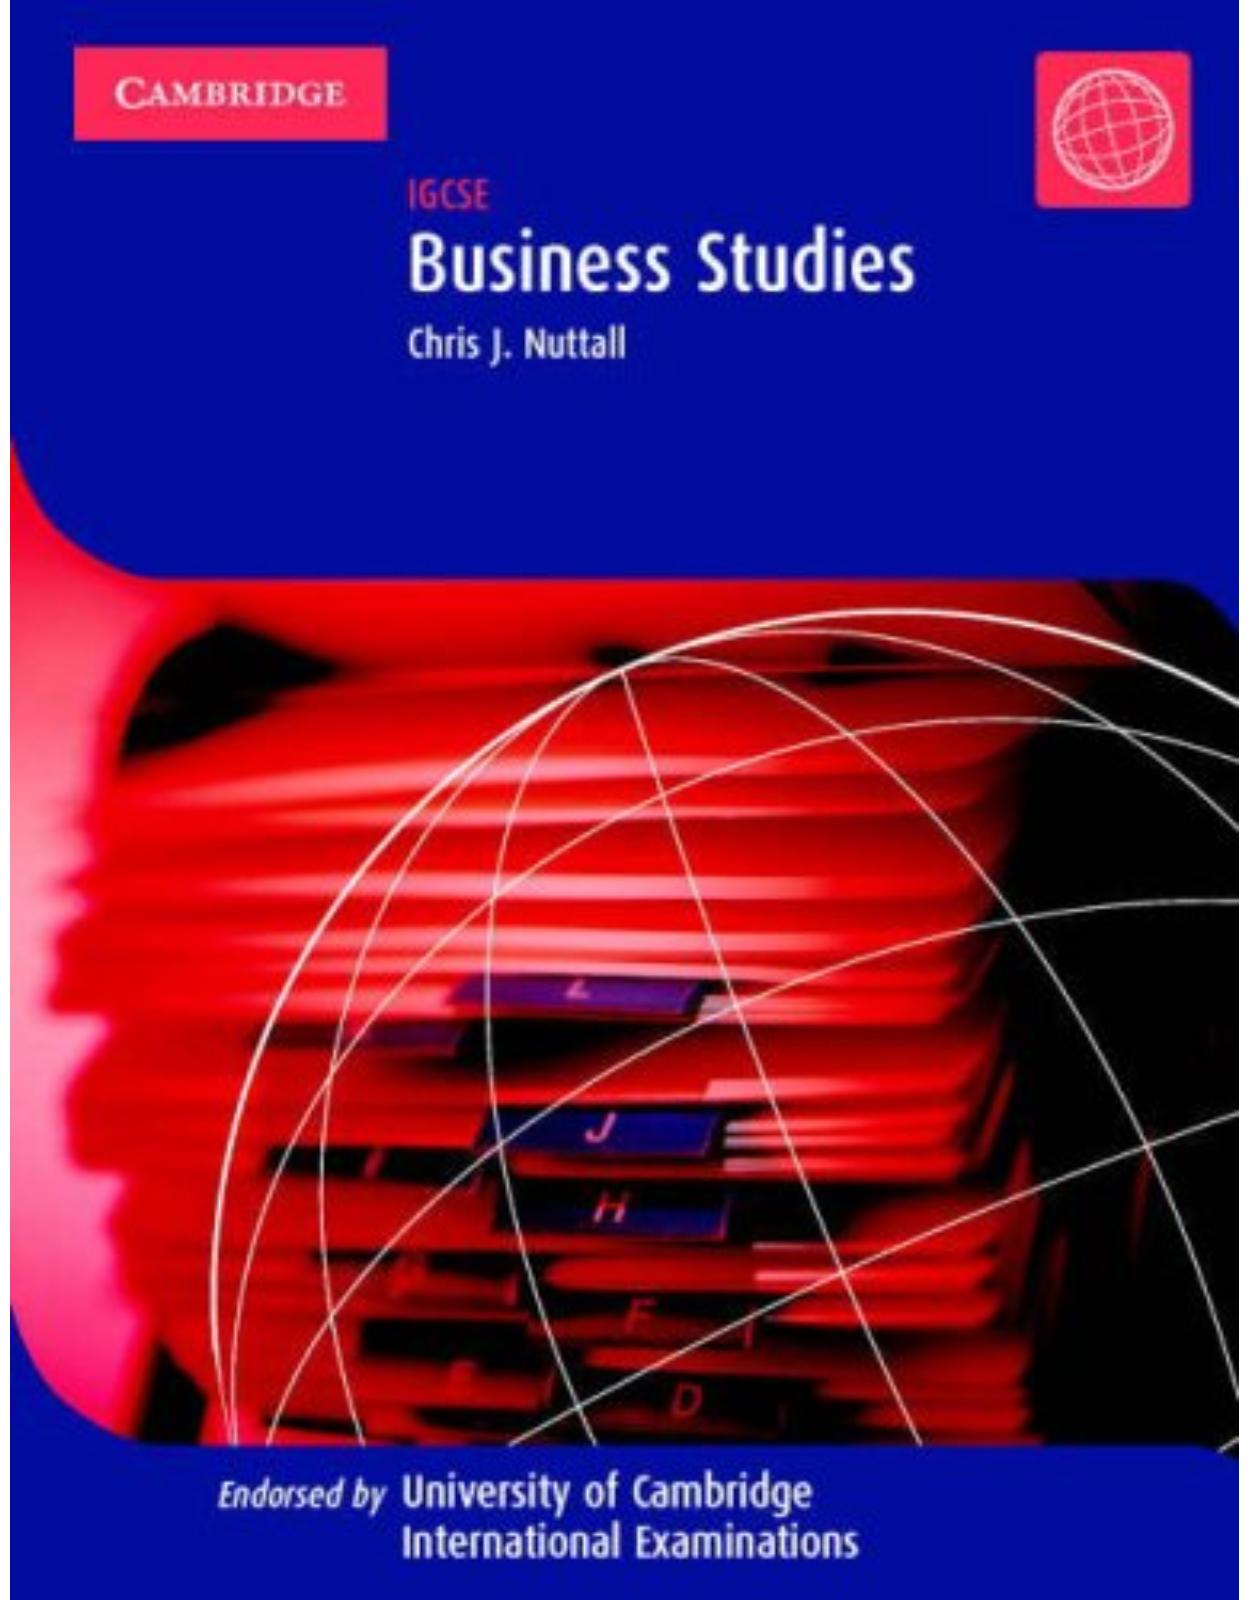 Business Studies: IGCSE